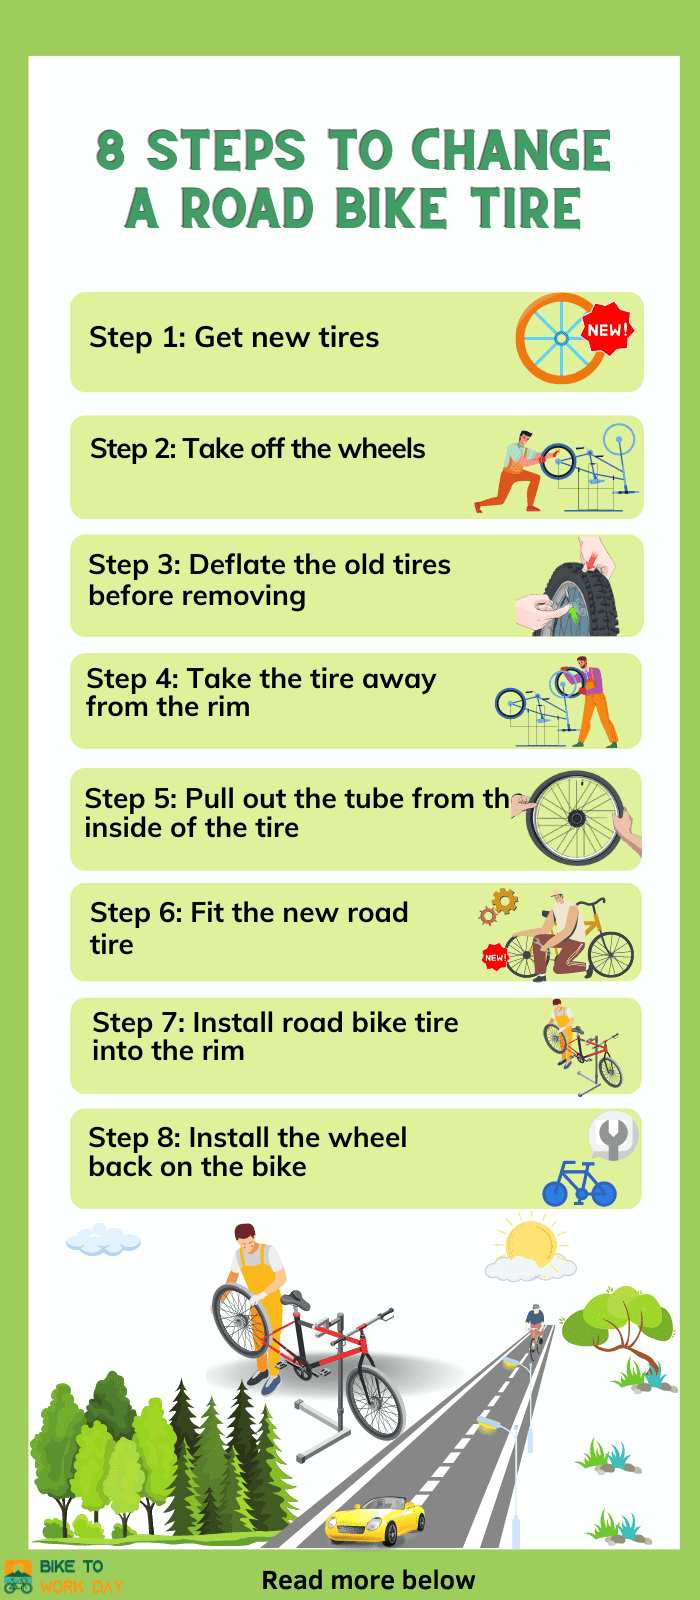 install-road-bike-tires